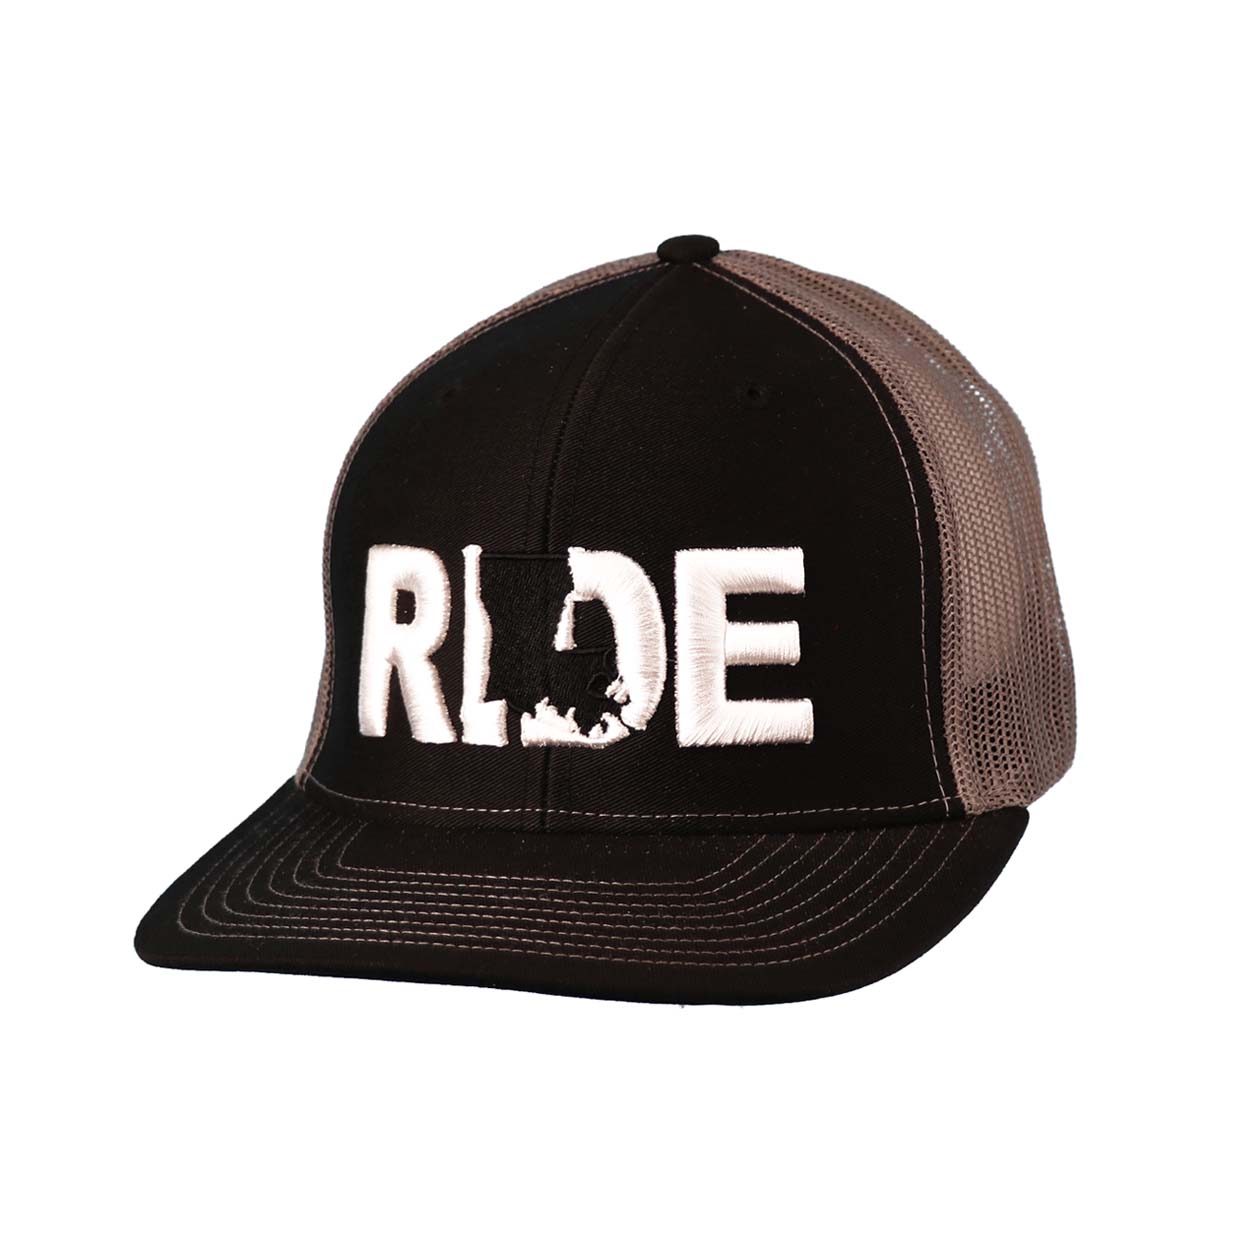 Ride Louisiana Classic Pro 3D Puff Embroidered Snapback Trucker Hat Black/Gray